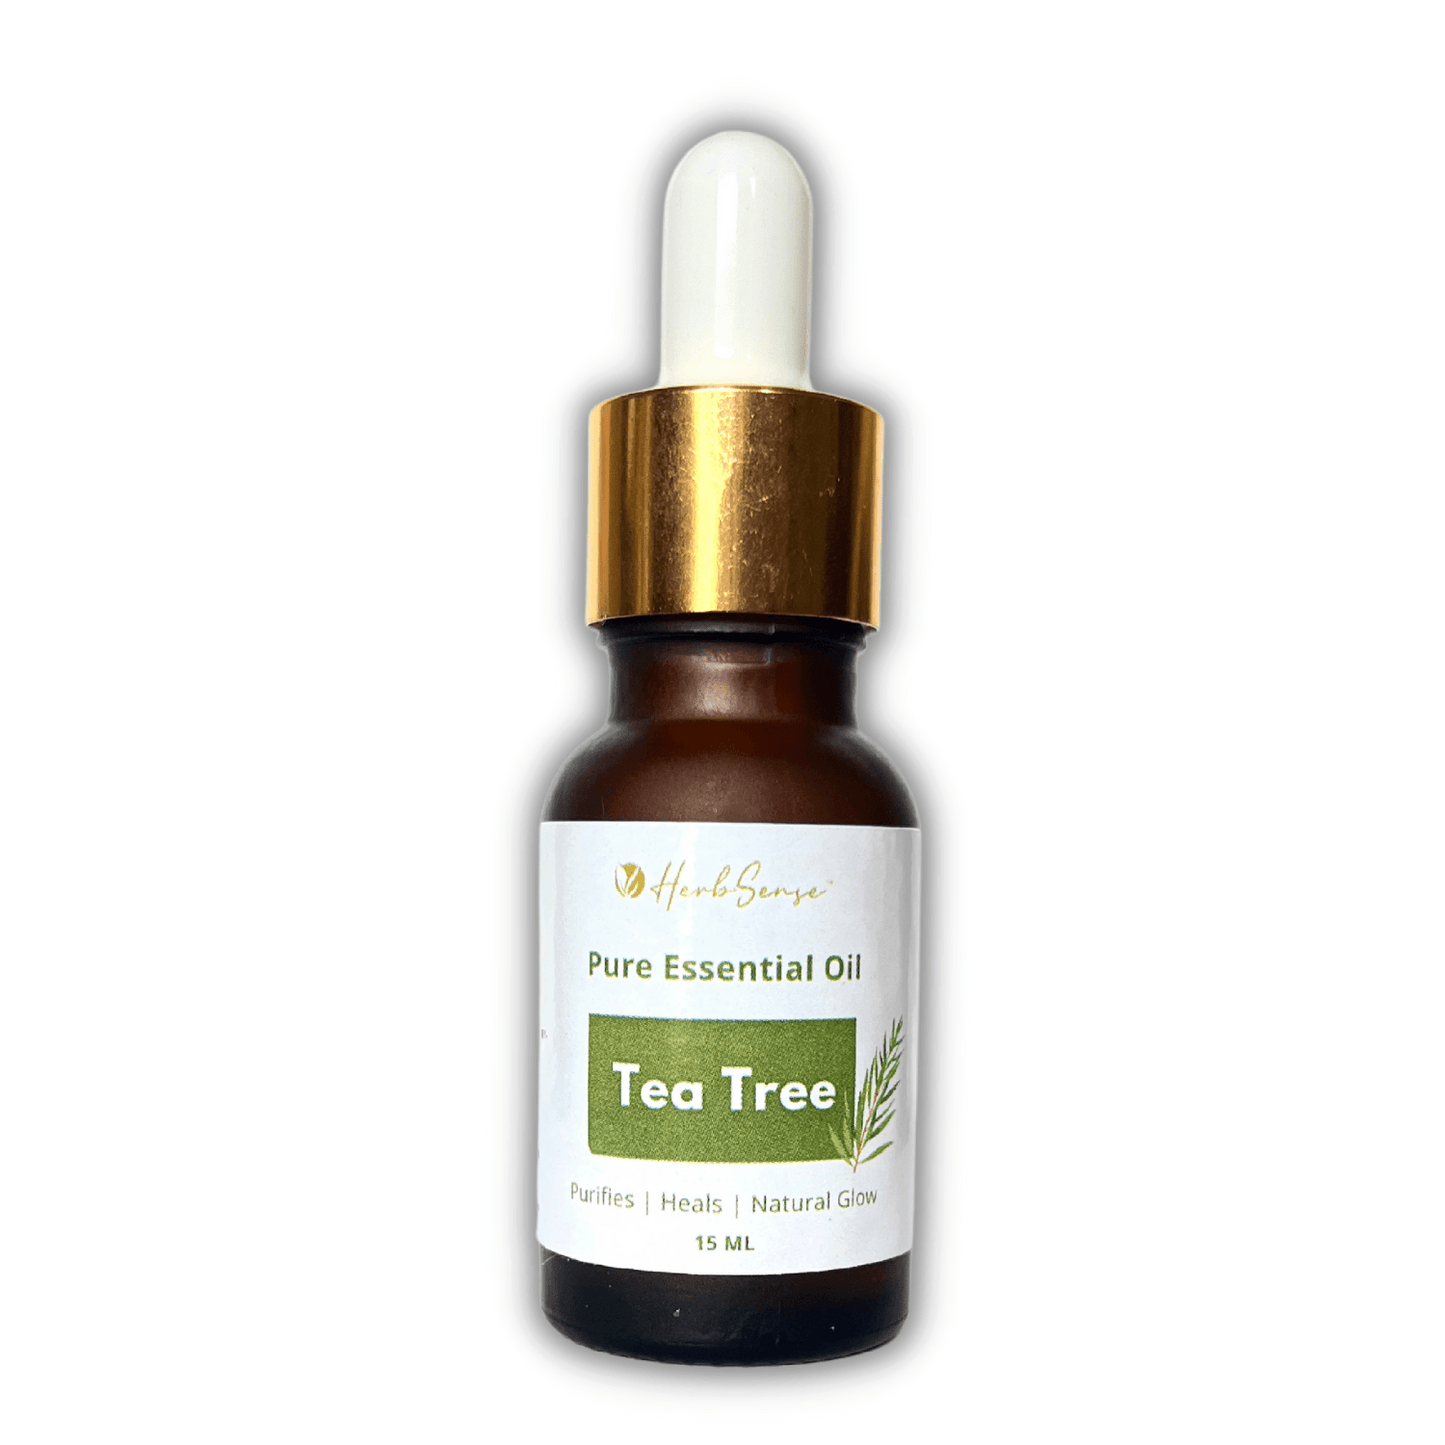 Tea Tree Essential Oil, for Acne, Pimples, Scars, Skin, Face, Hair care & Anti-Dandruff - 15ml - Herbsense